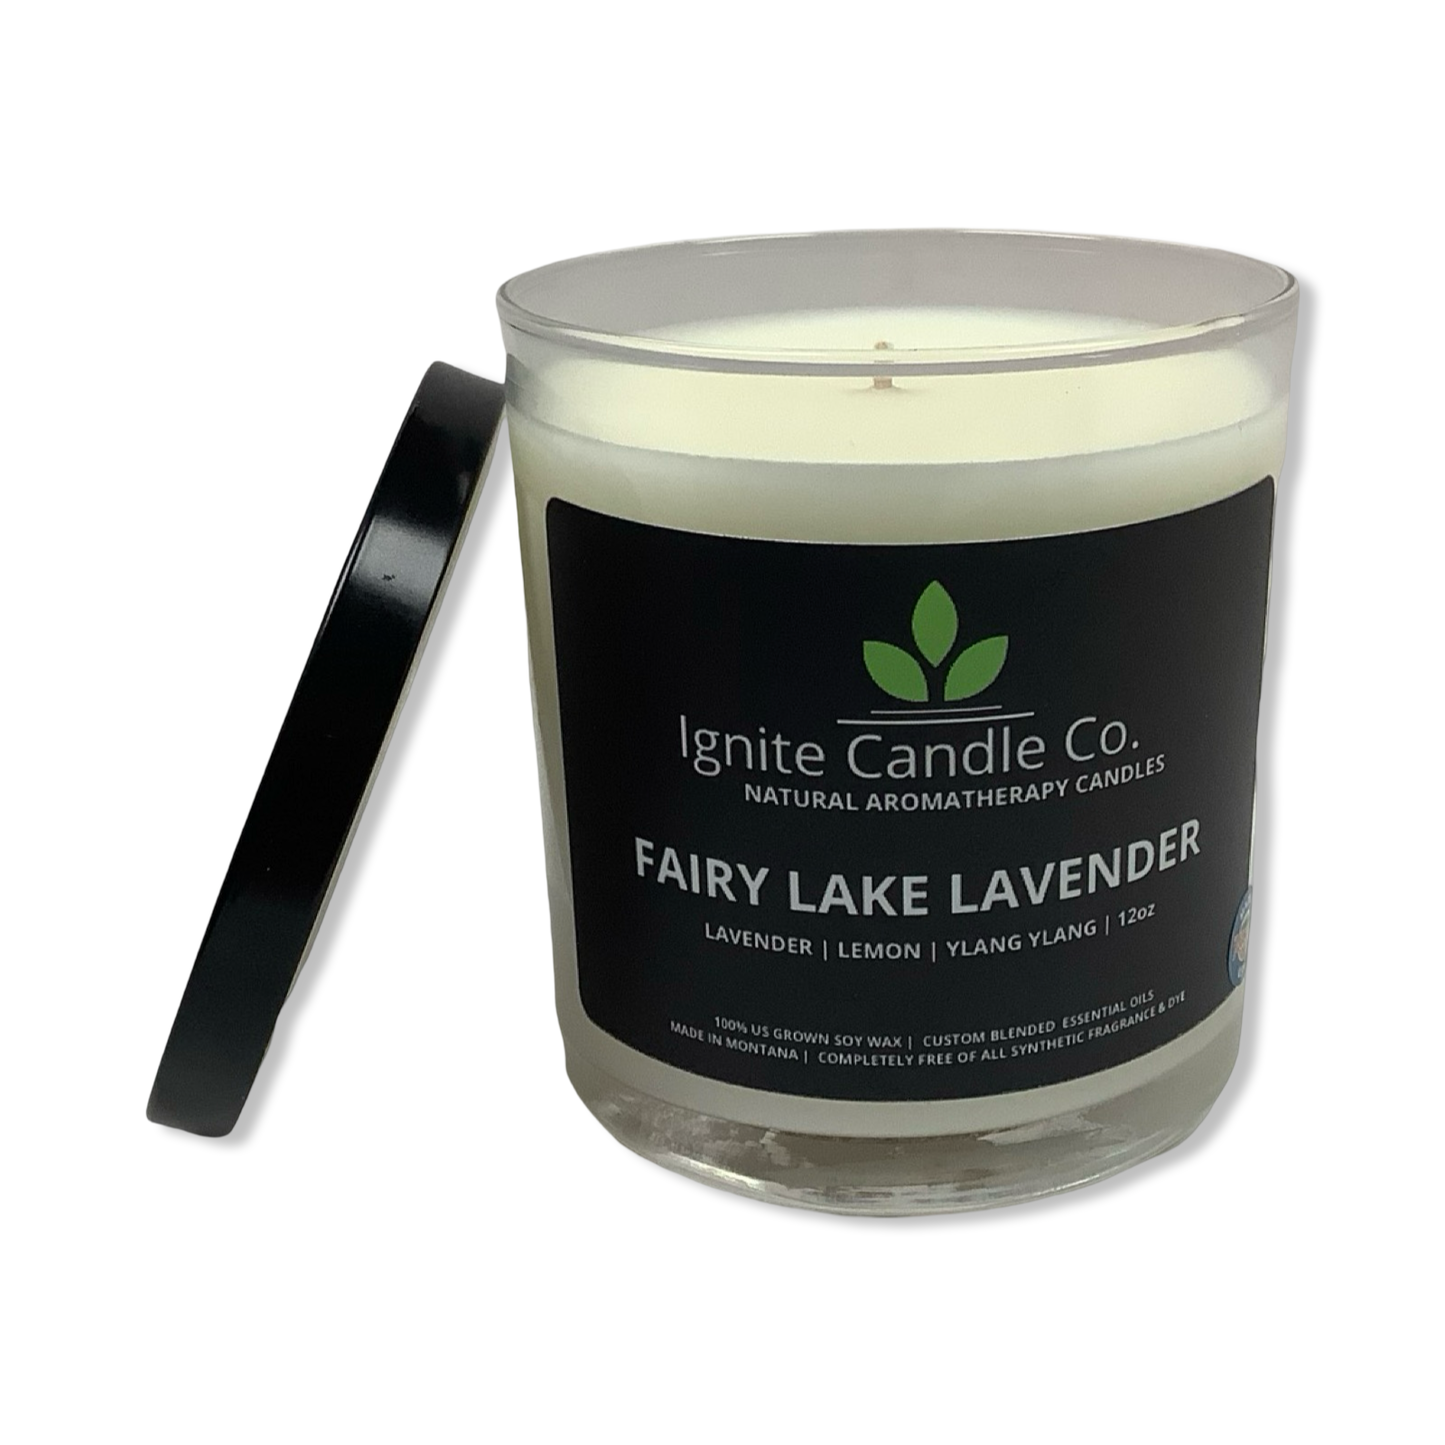 Fairy Lake Lavender - Ignite Candle Co.